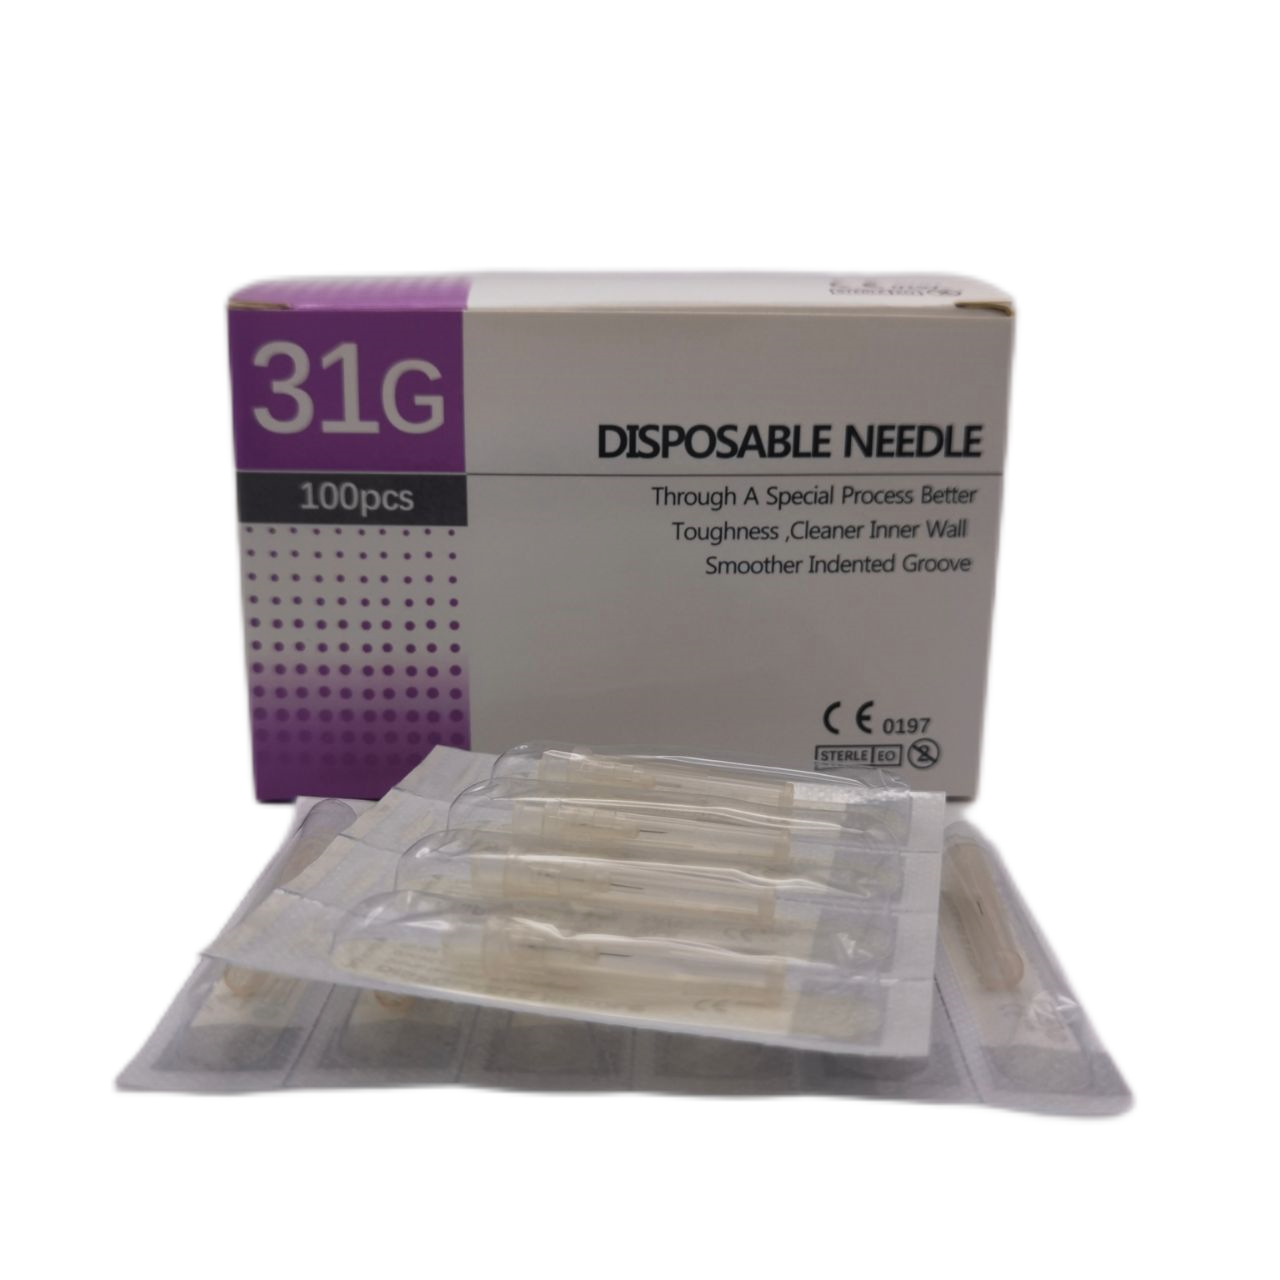 Disposable Needles 31G6MM100pcs/box